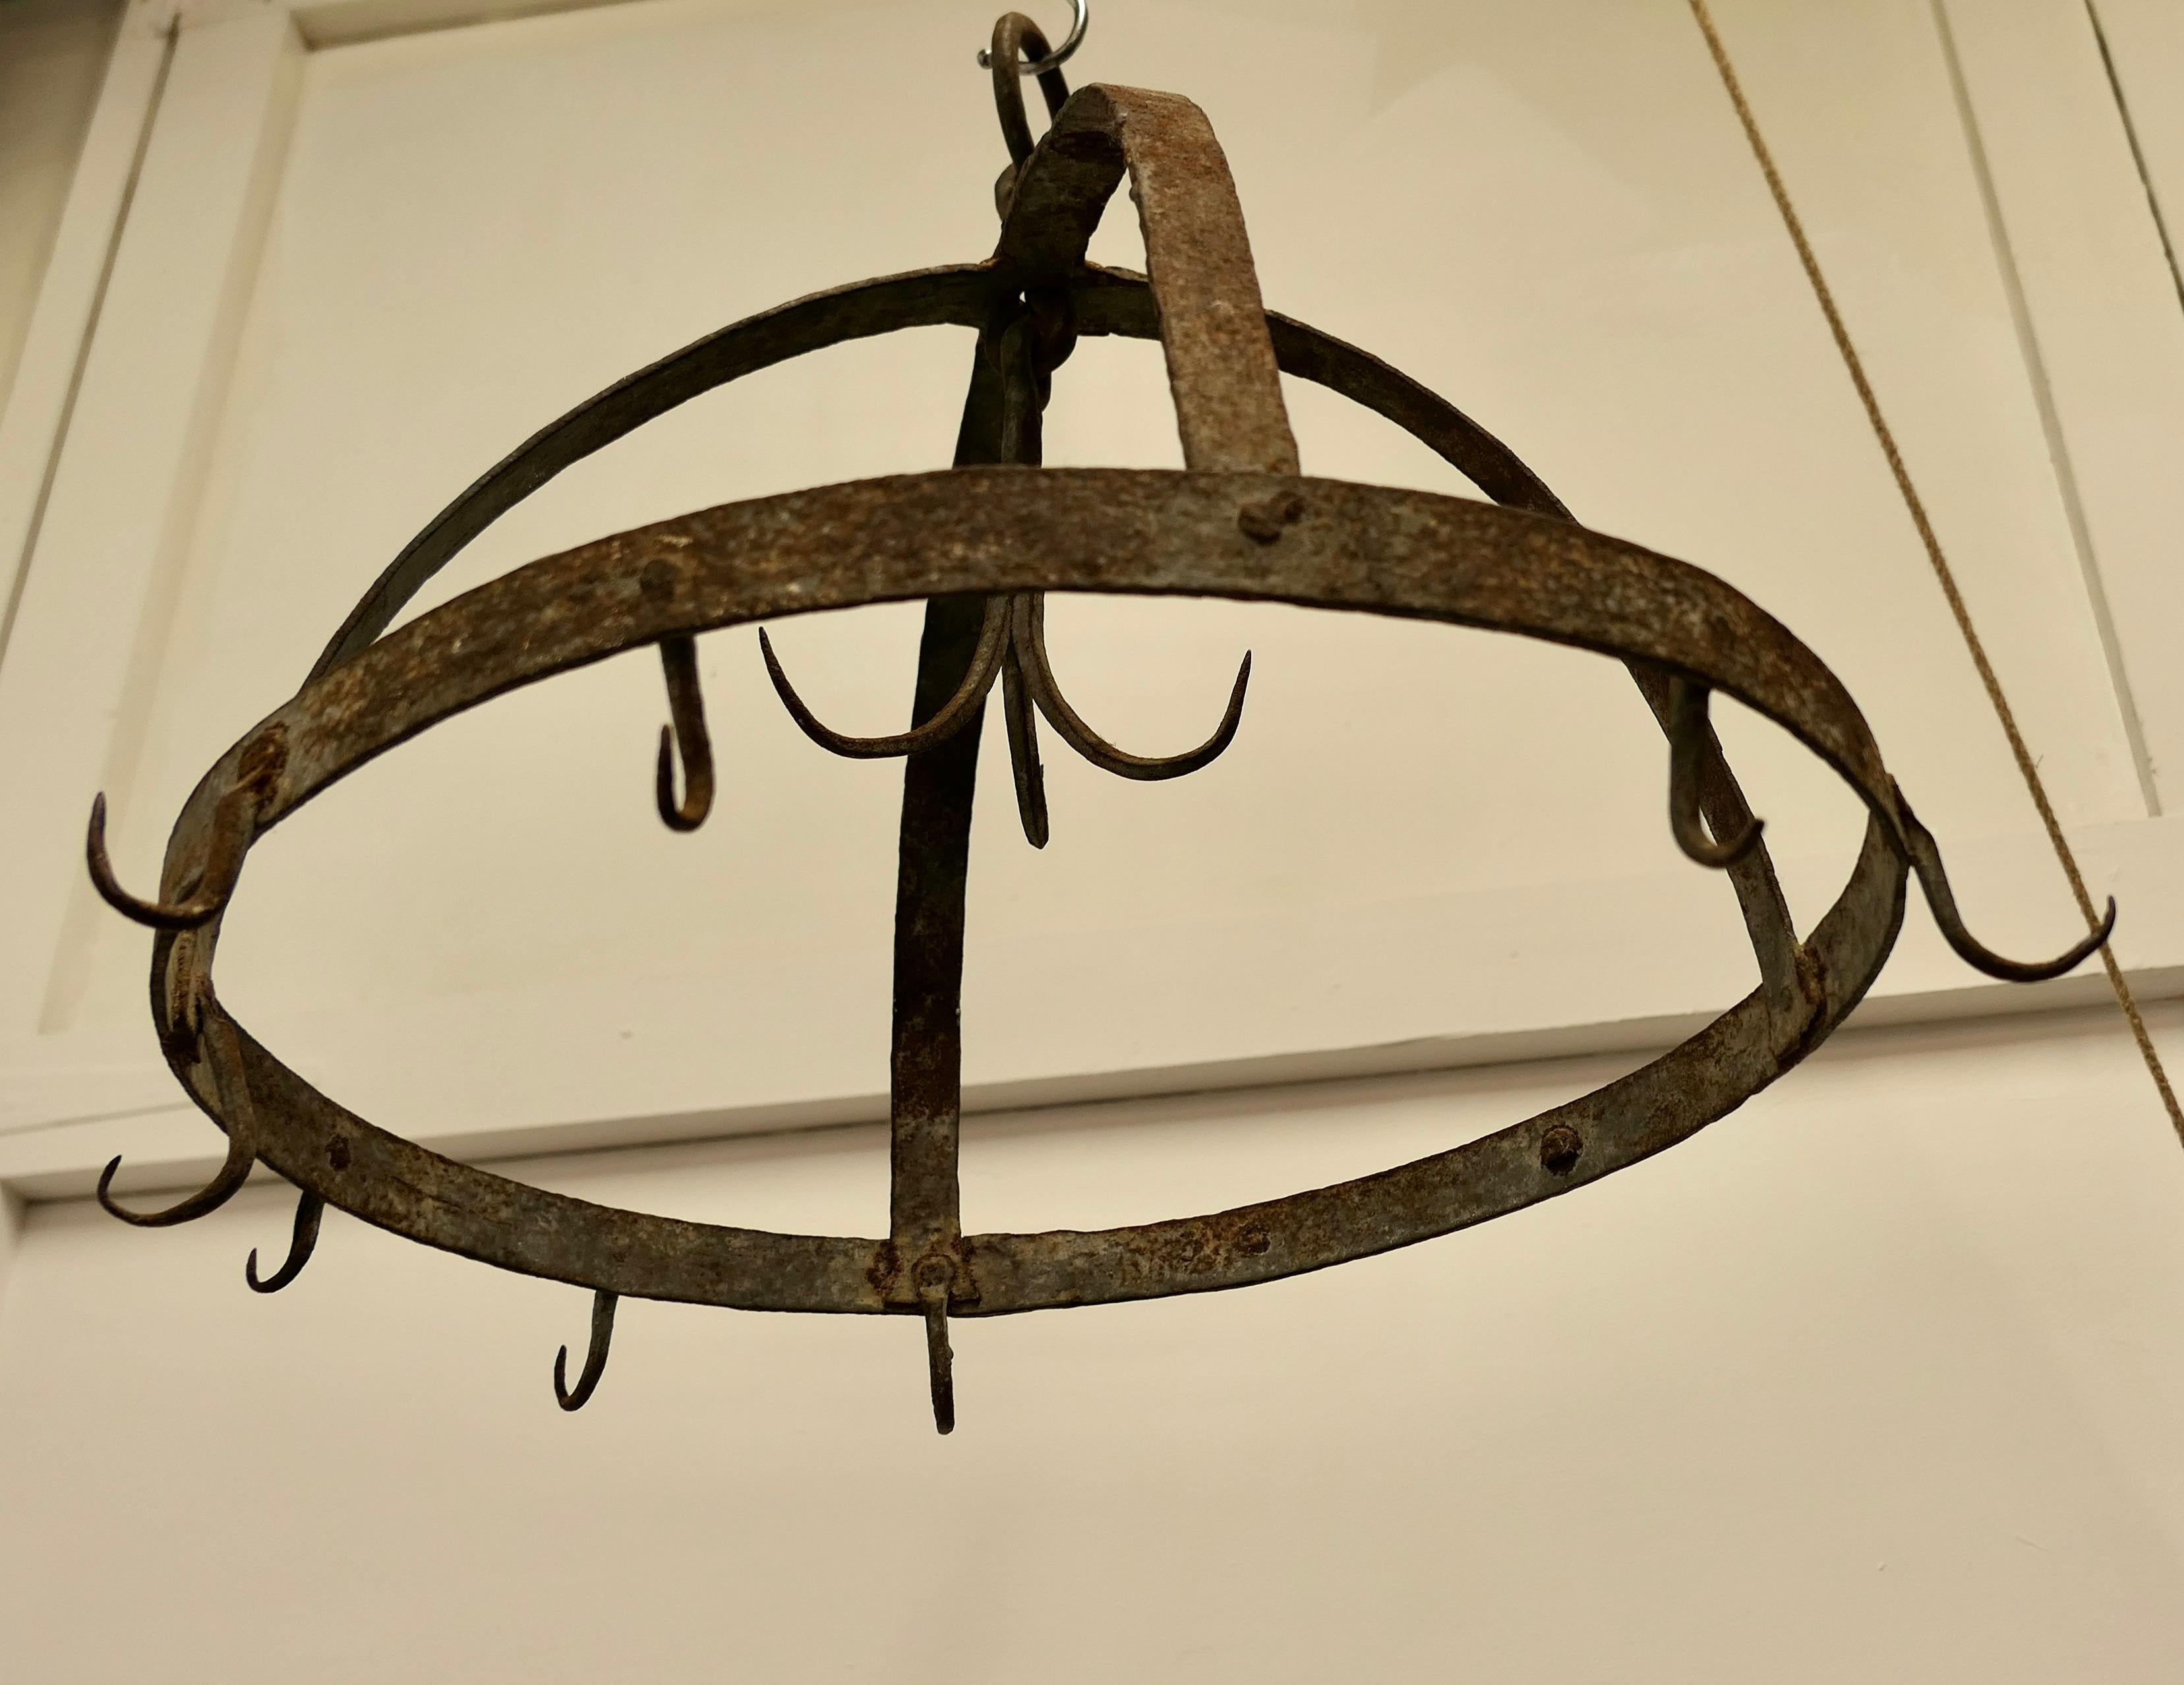 19th Century Blacksmith Made Iron Game Hanger, Kitchen Utensils or Pot Hanger